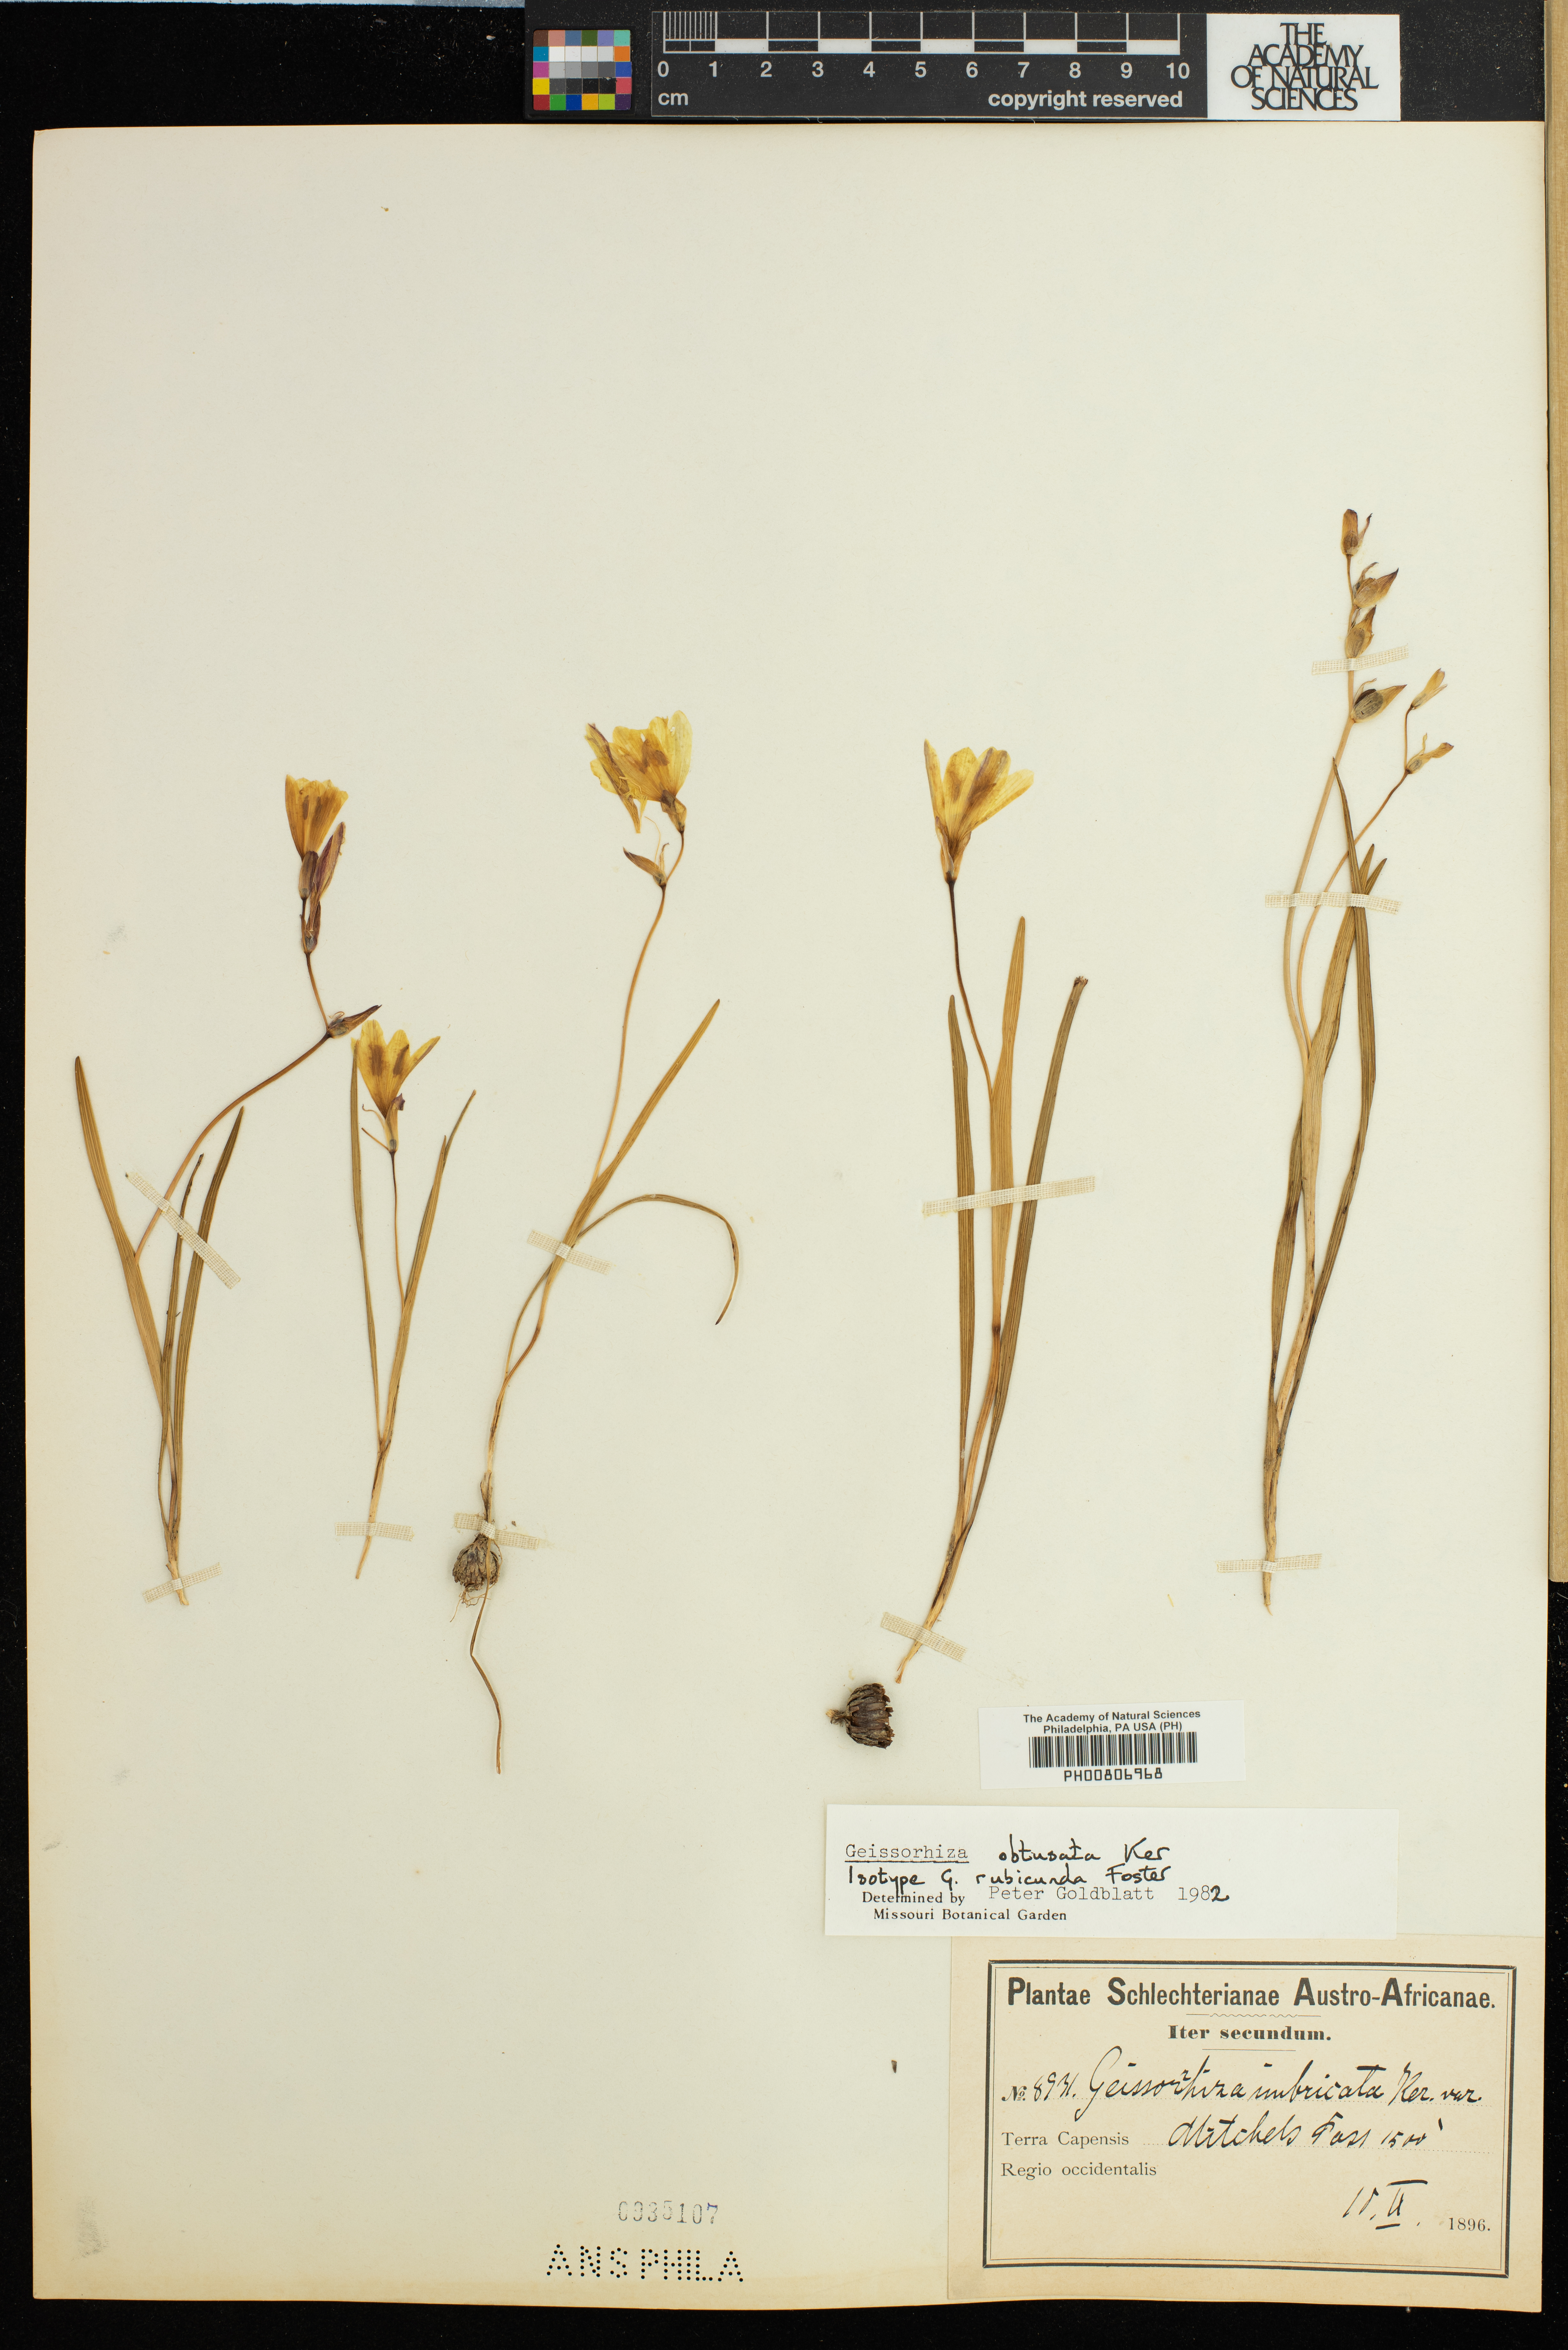 Geissorhiza imbricata subsp. bicolor image